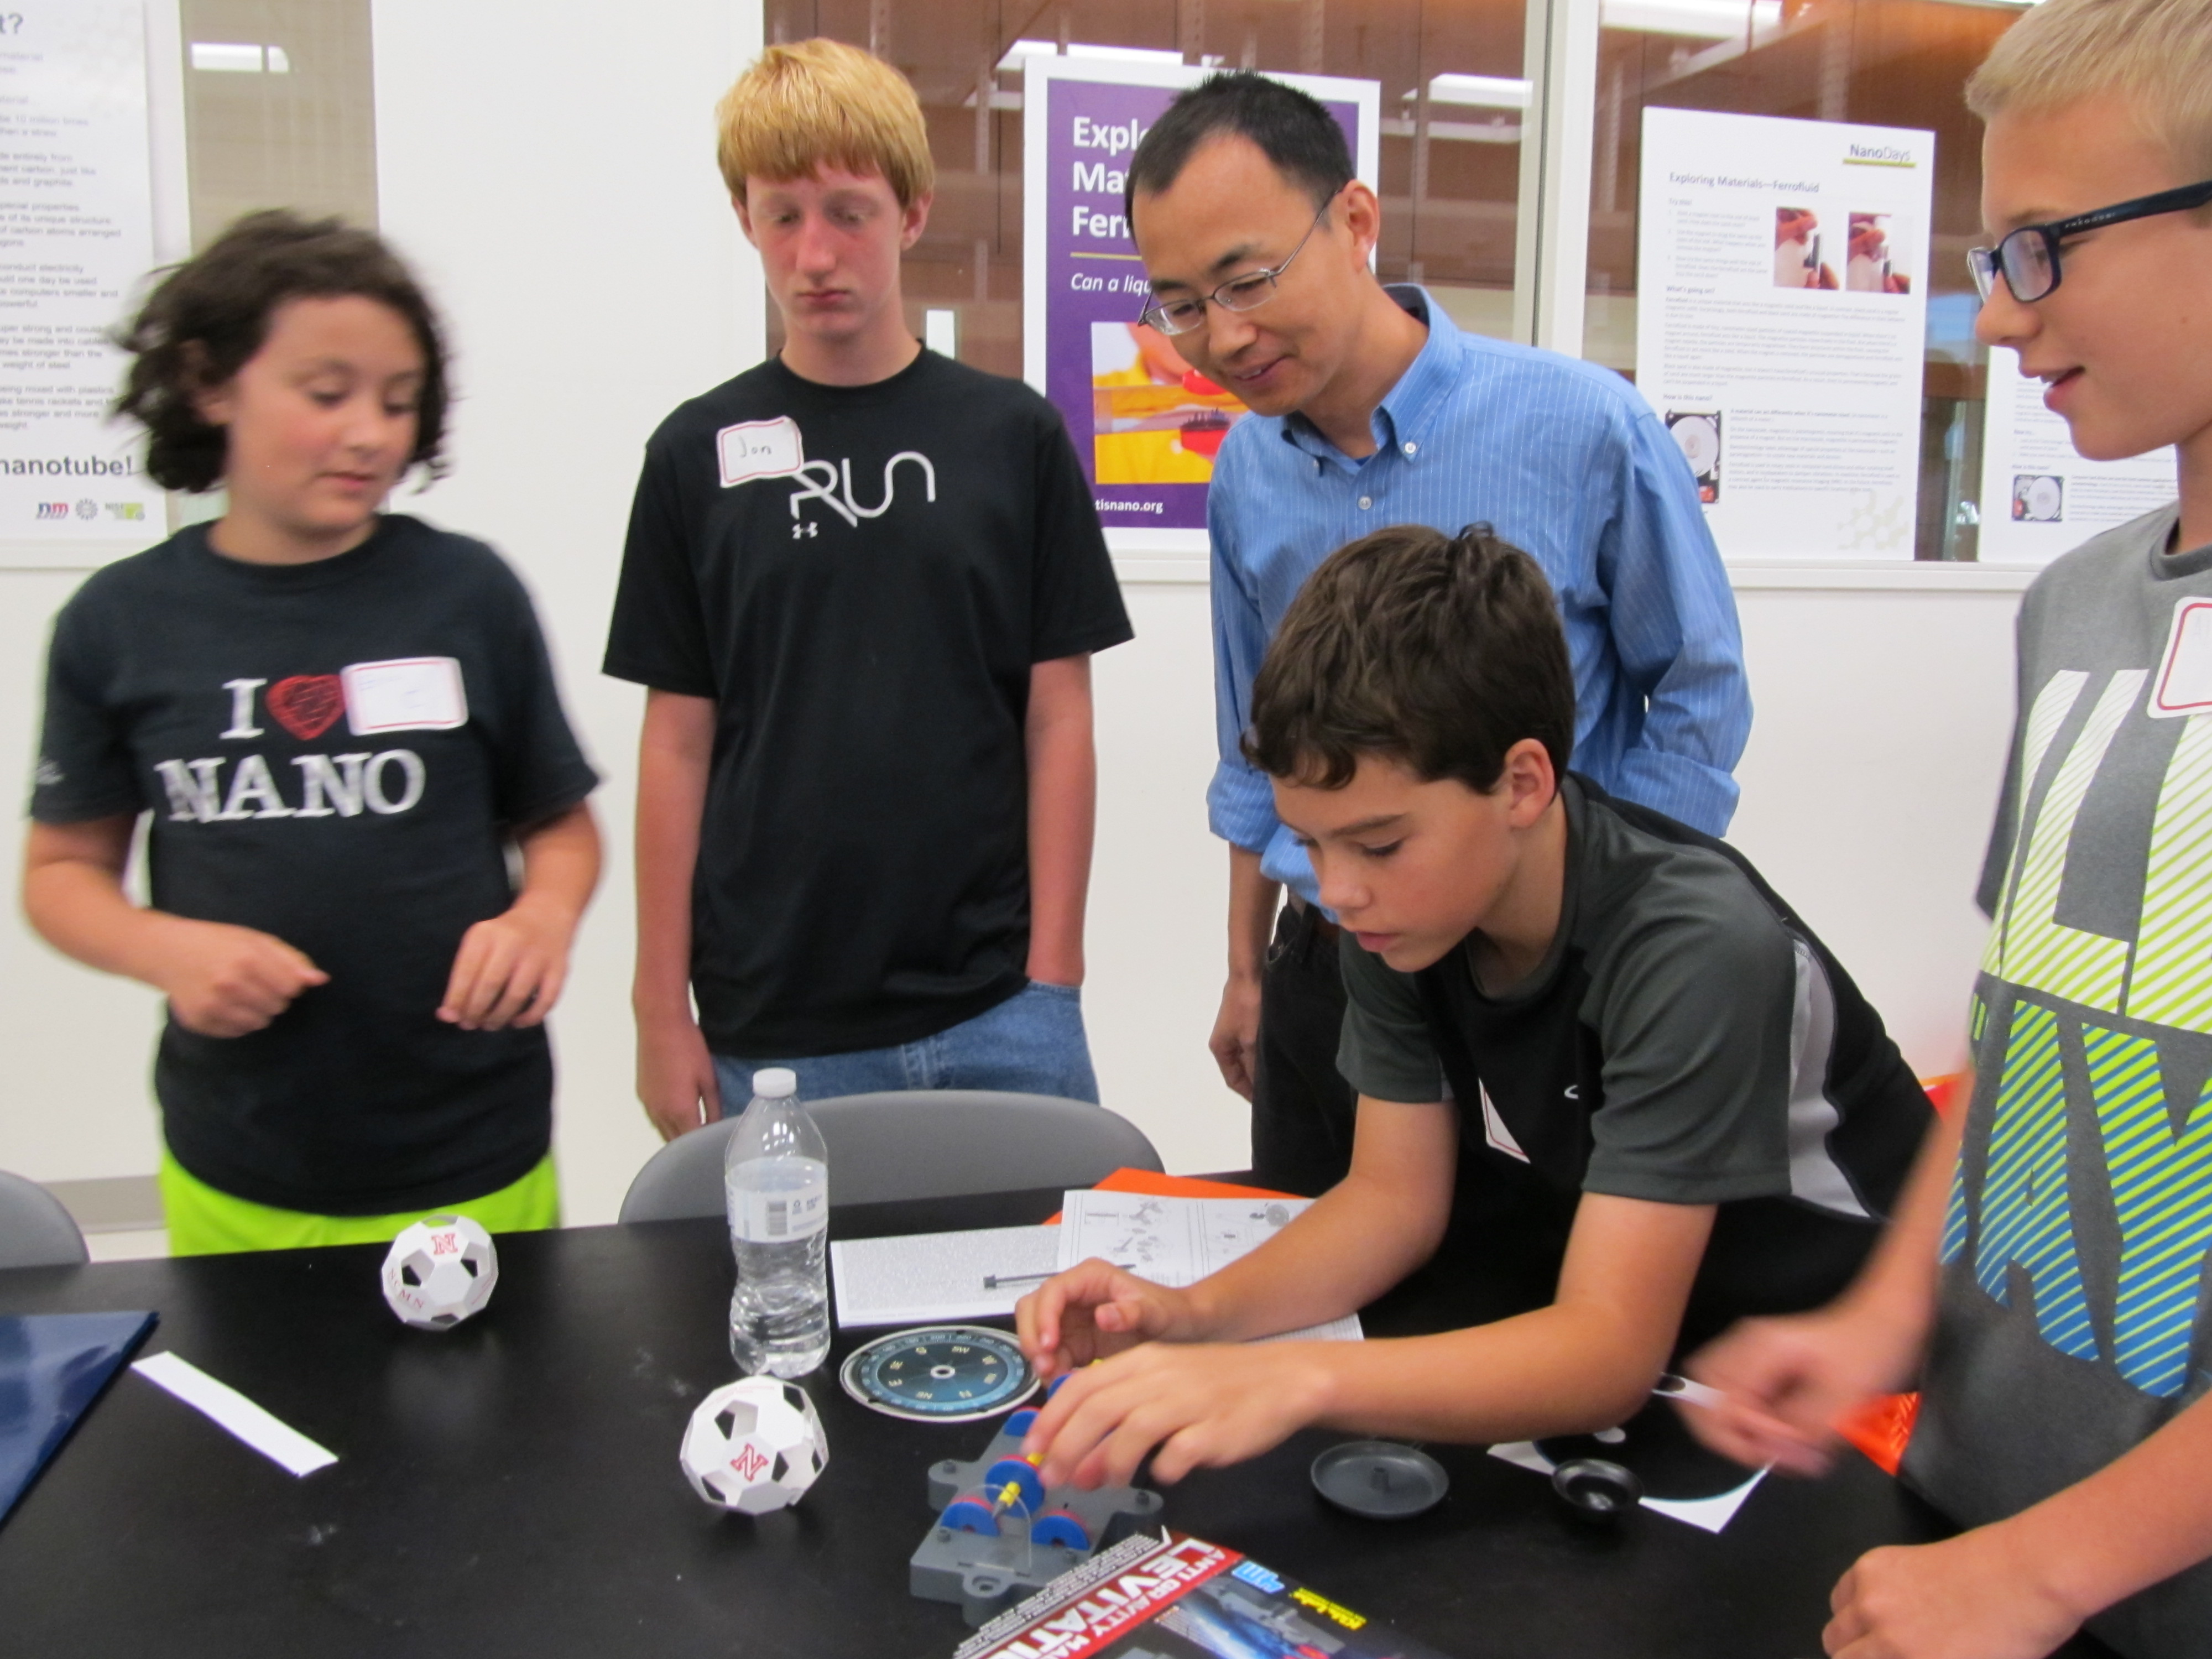 Professor Xu surveys students working on lab apparatus